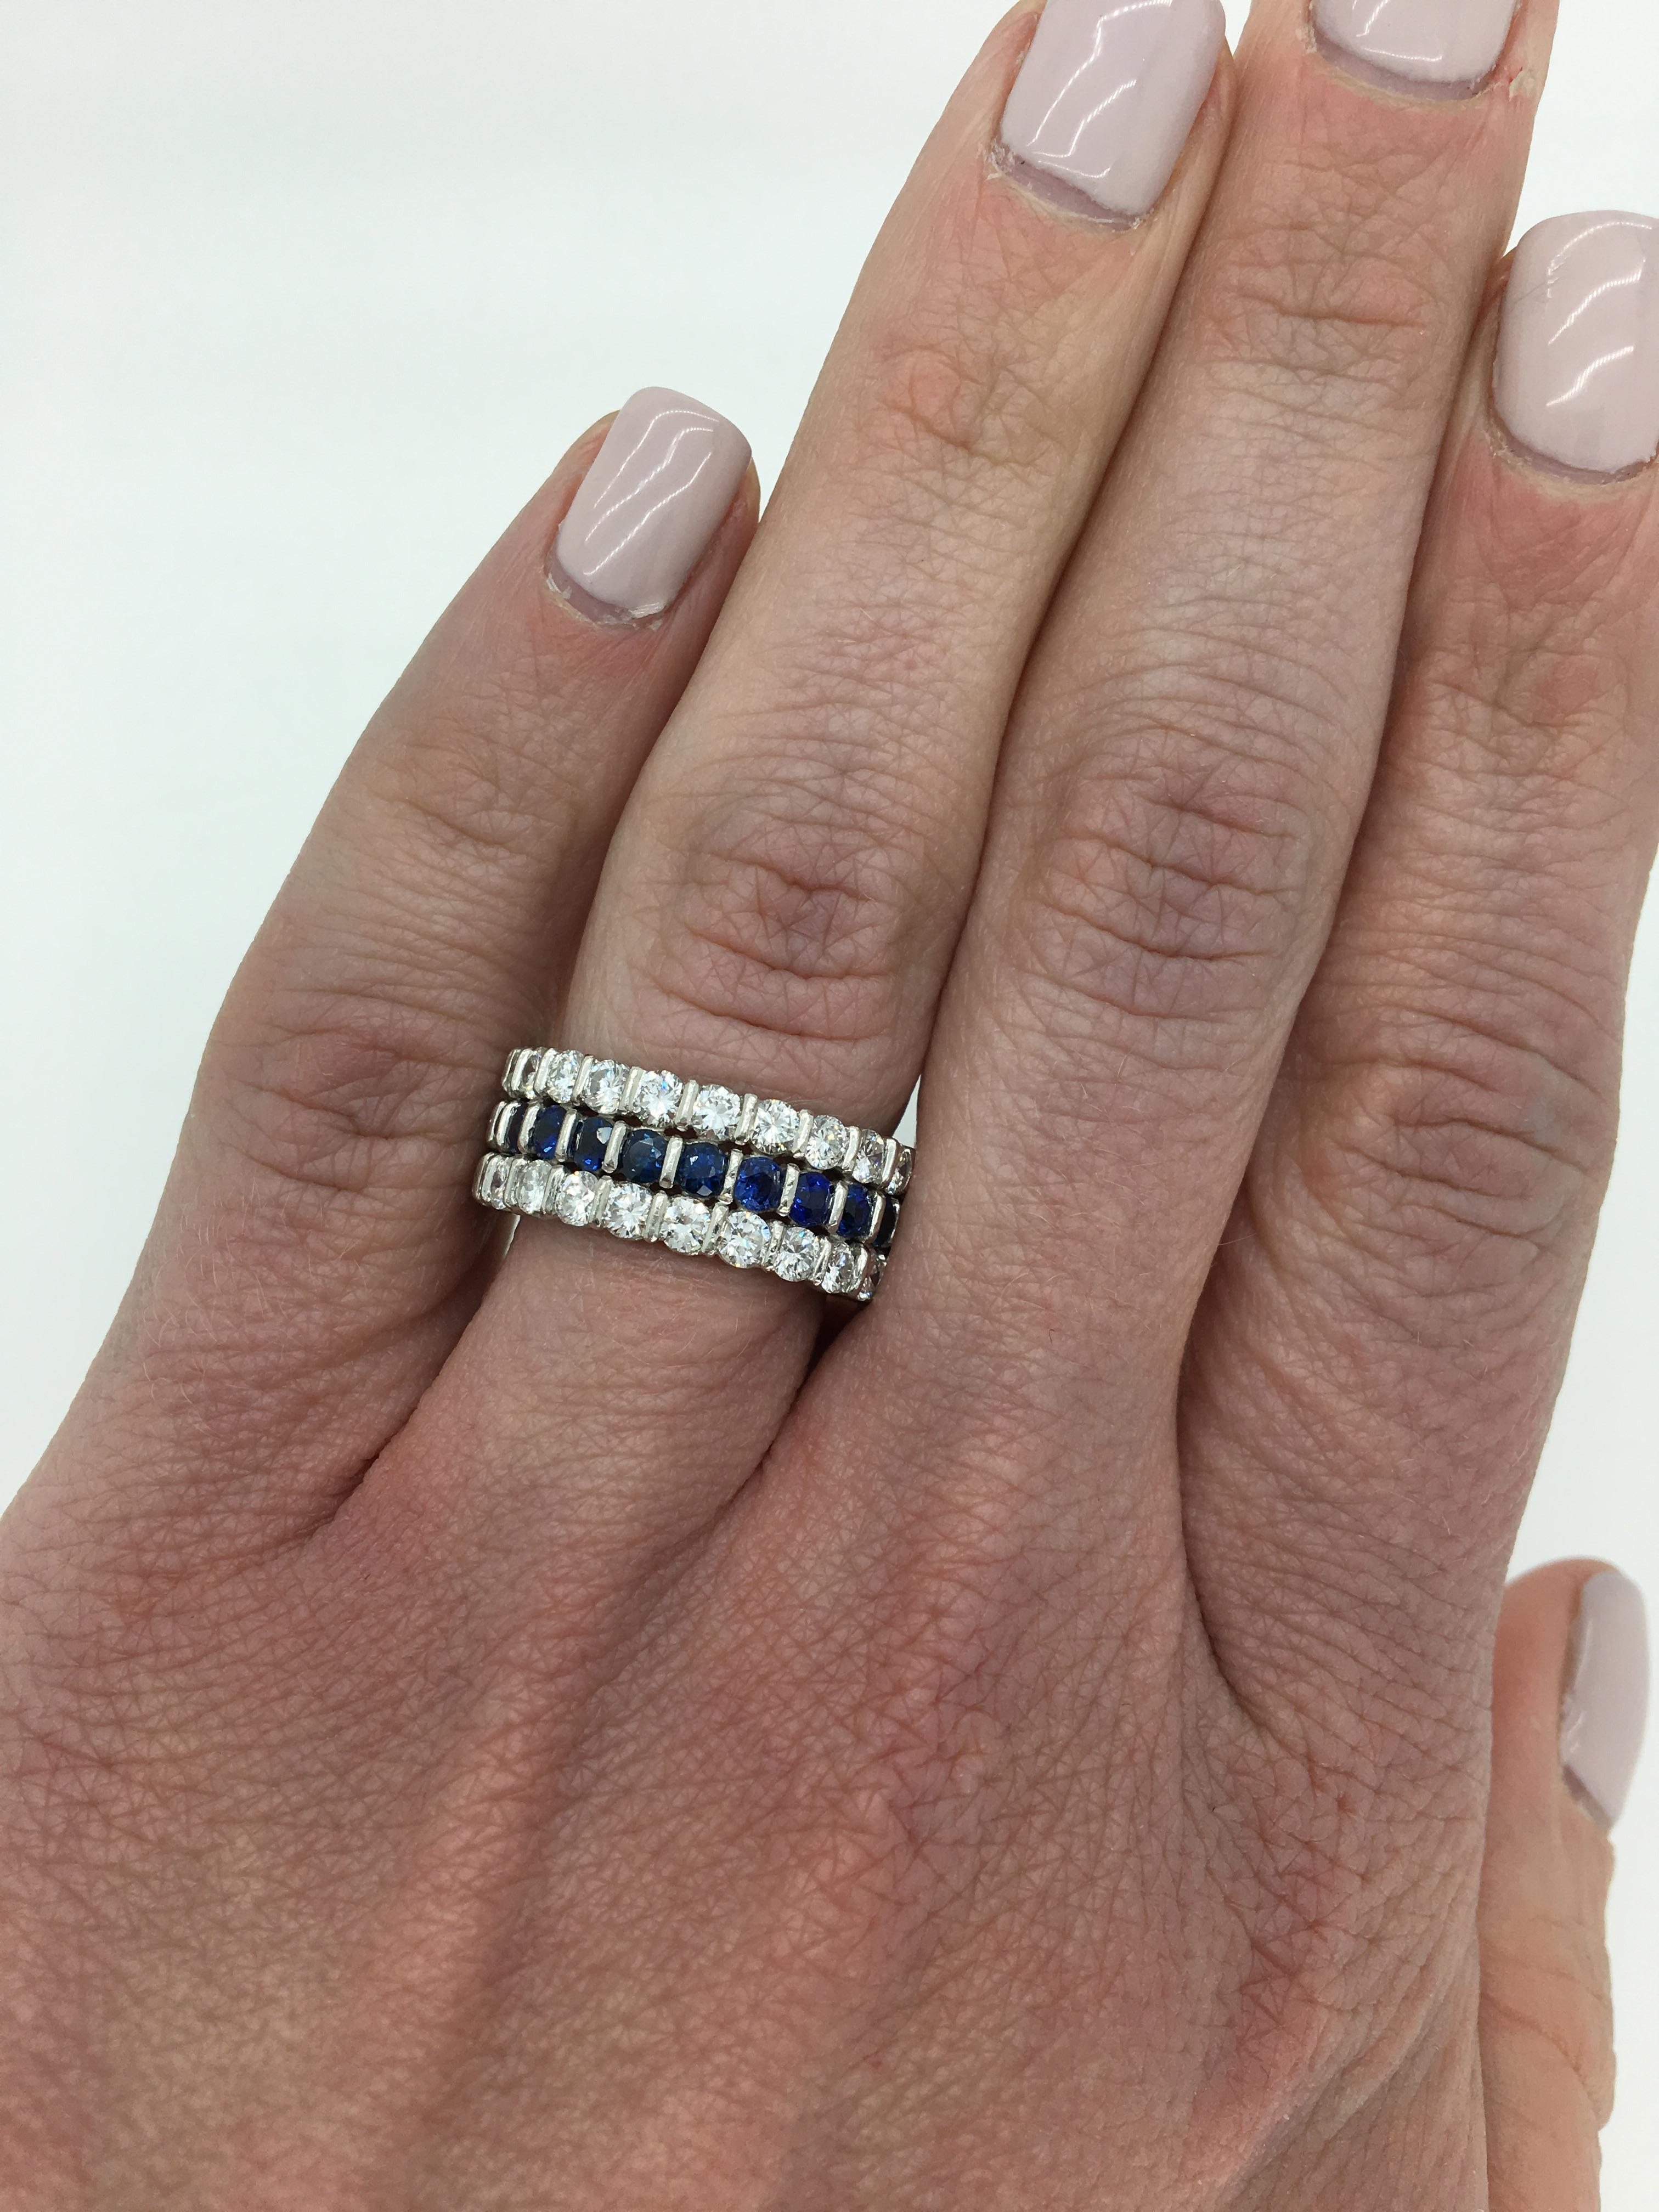 Three row eternity style diamond and blue sapphire ring crafted in platinum.

Gemstone: Diamond & Sapphire
Gemstone Carat Weight: Approximately 1.40CTW Round Cut Sapphires
Diamond Carat Weight:  Approximately 2.00CTW
Diamond Cut: Round